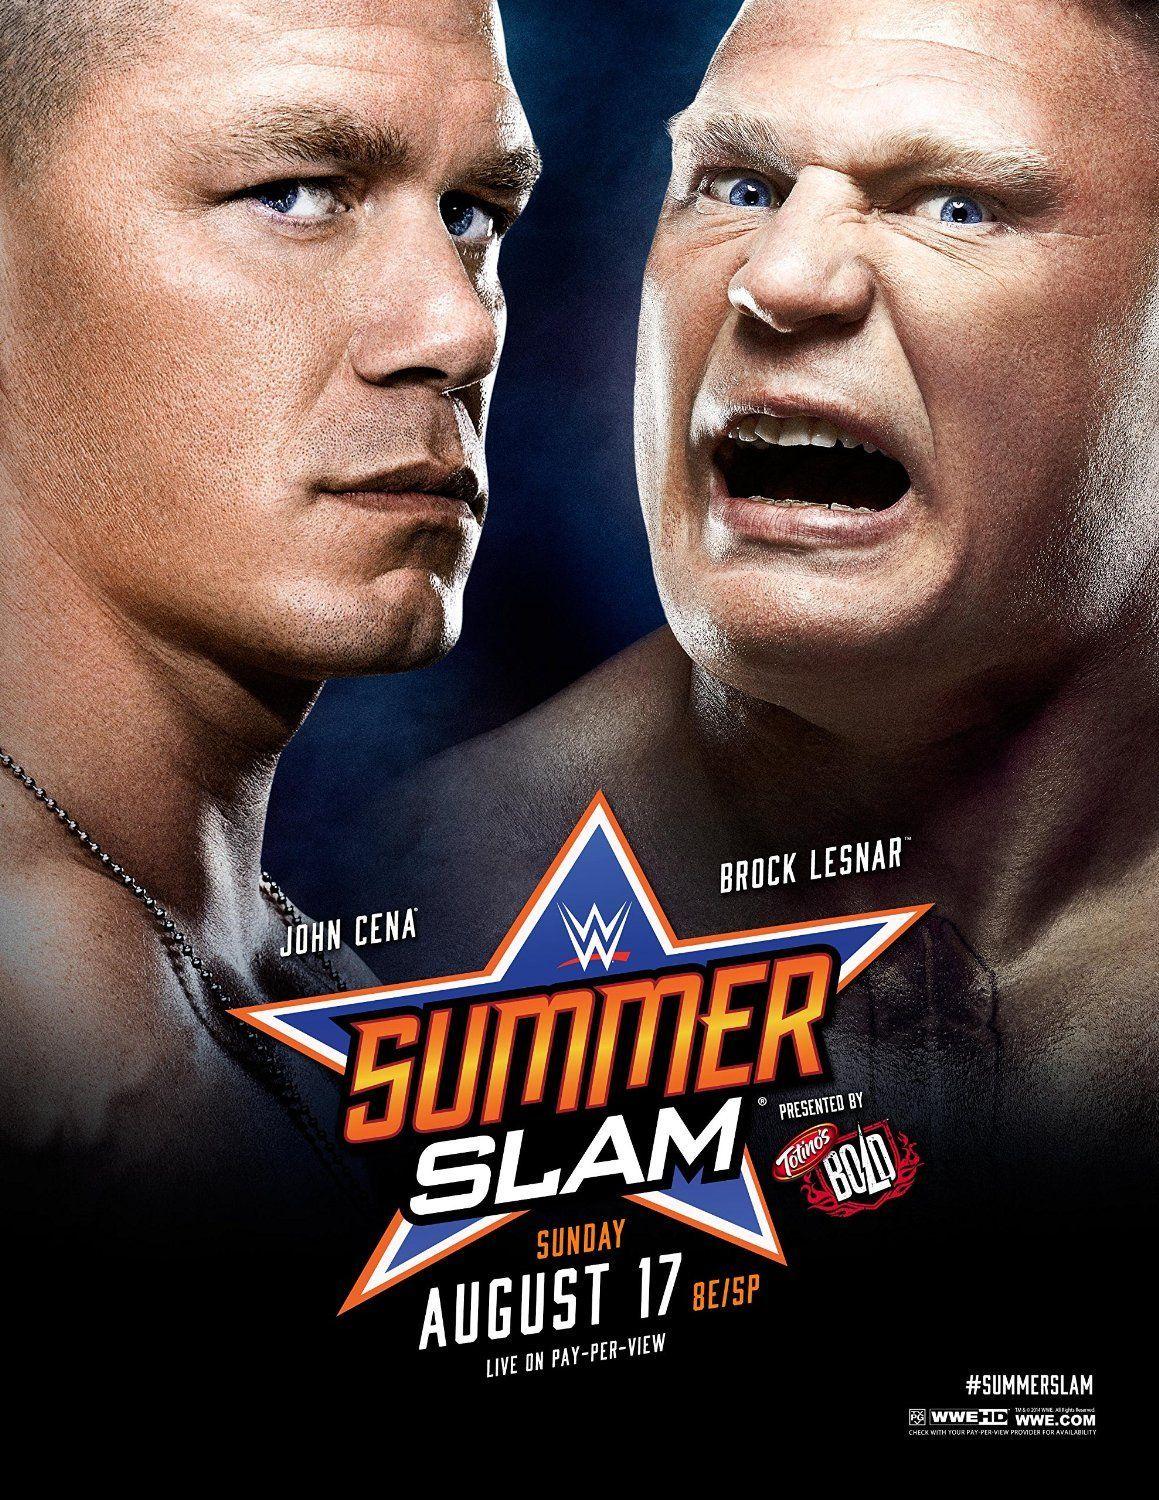 WWE SummerSlam 2014 spoiler? John Cena, Brock Lesnar featured